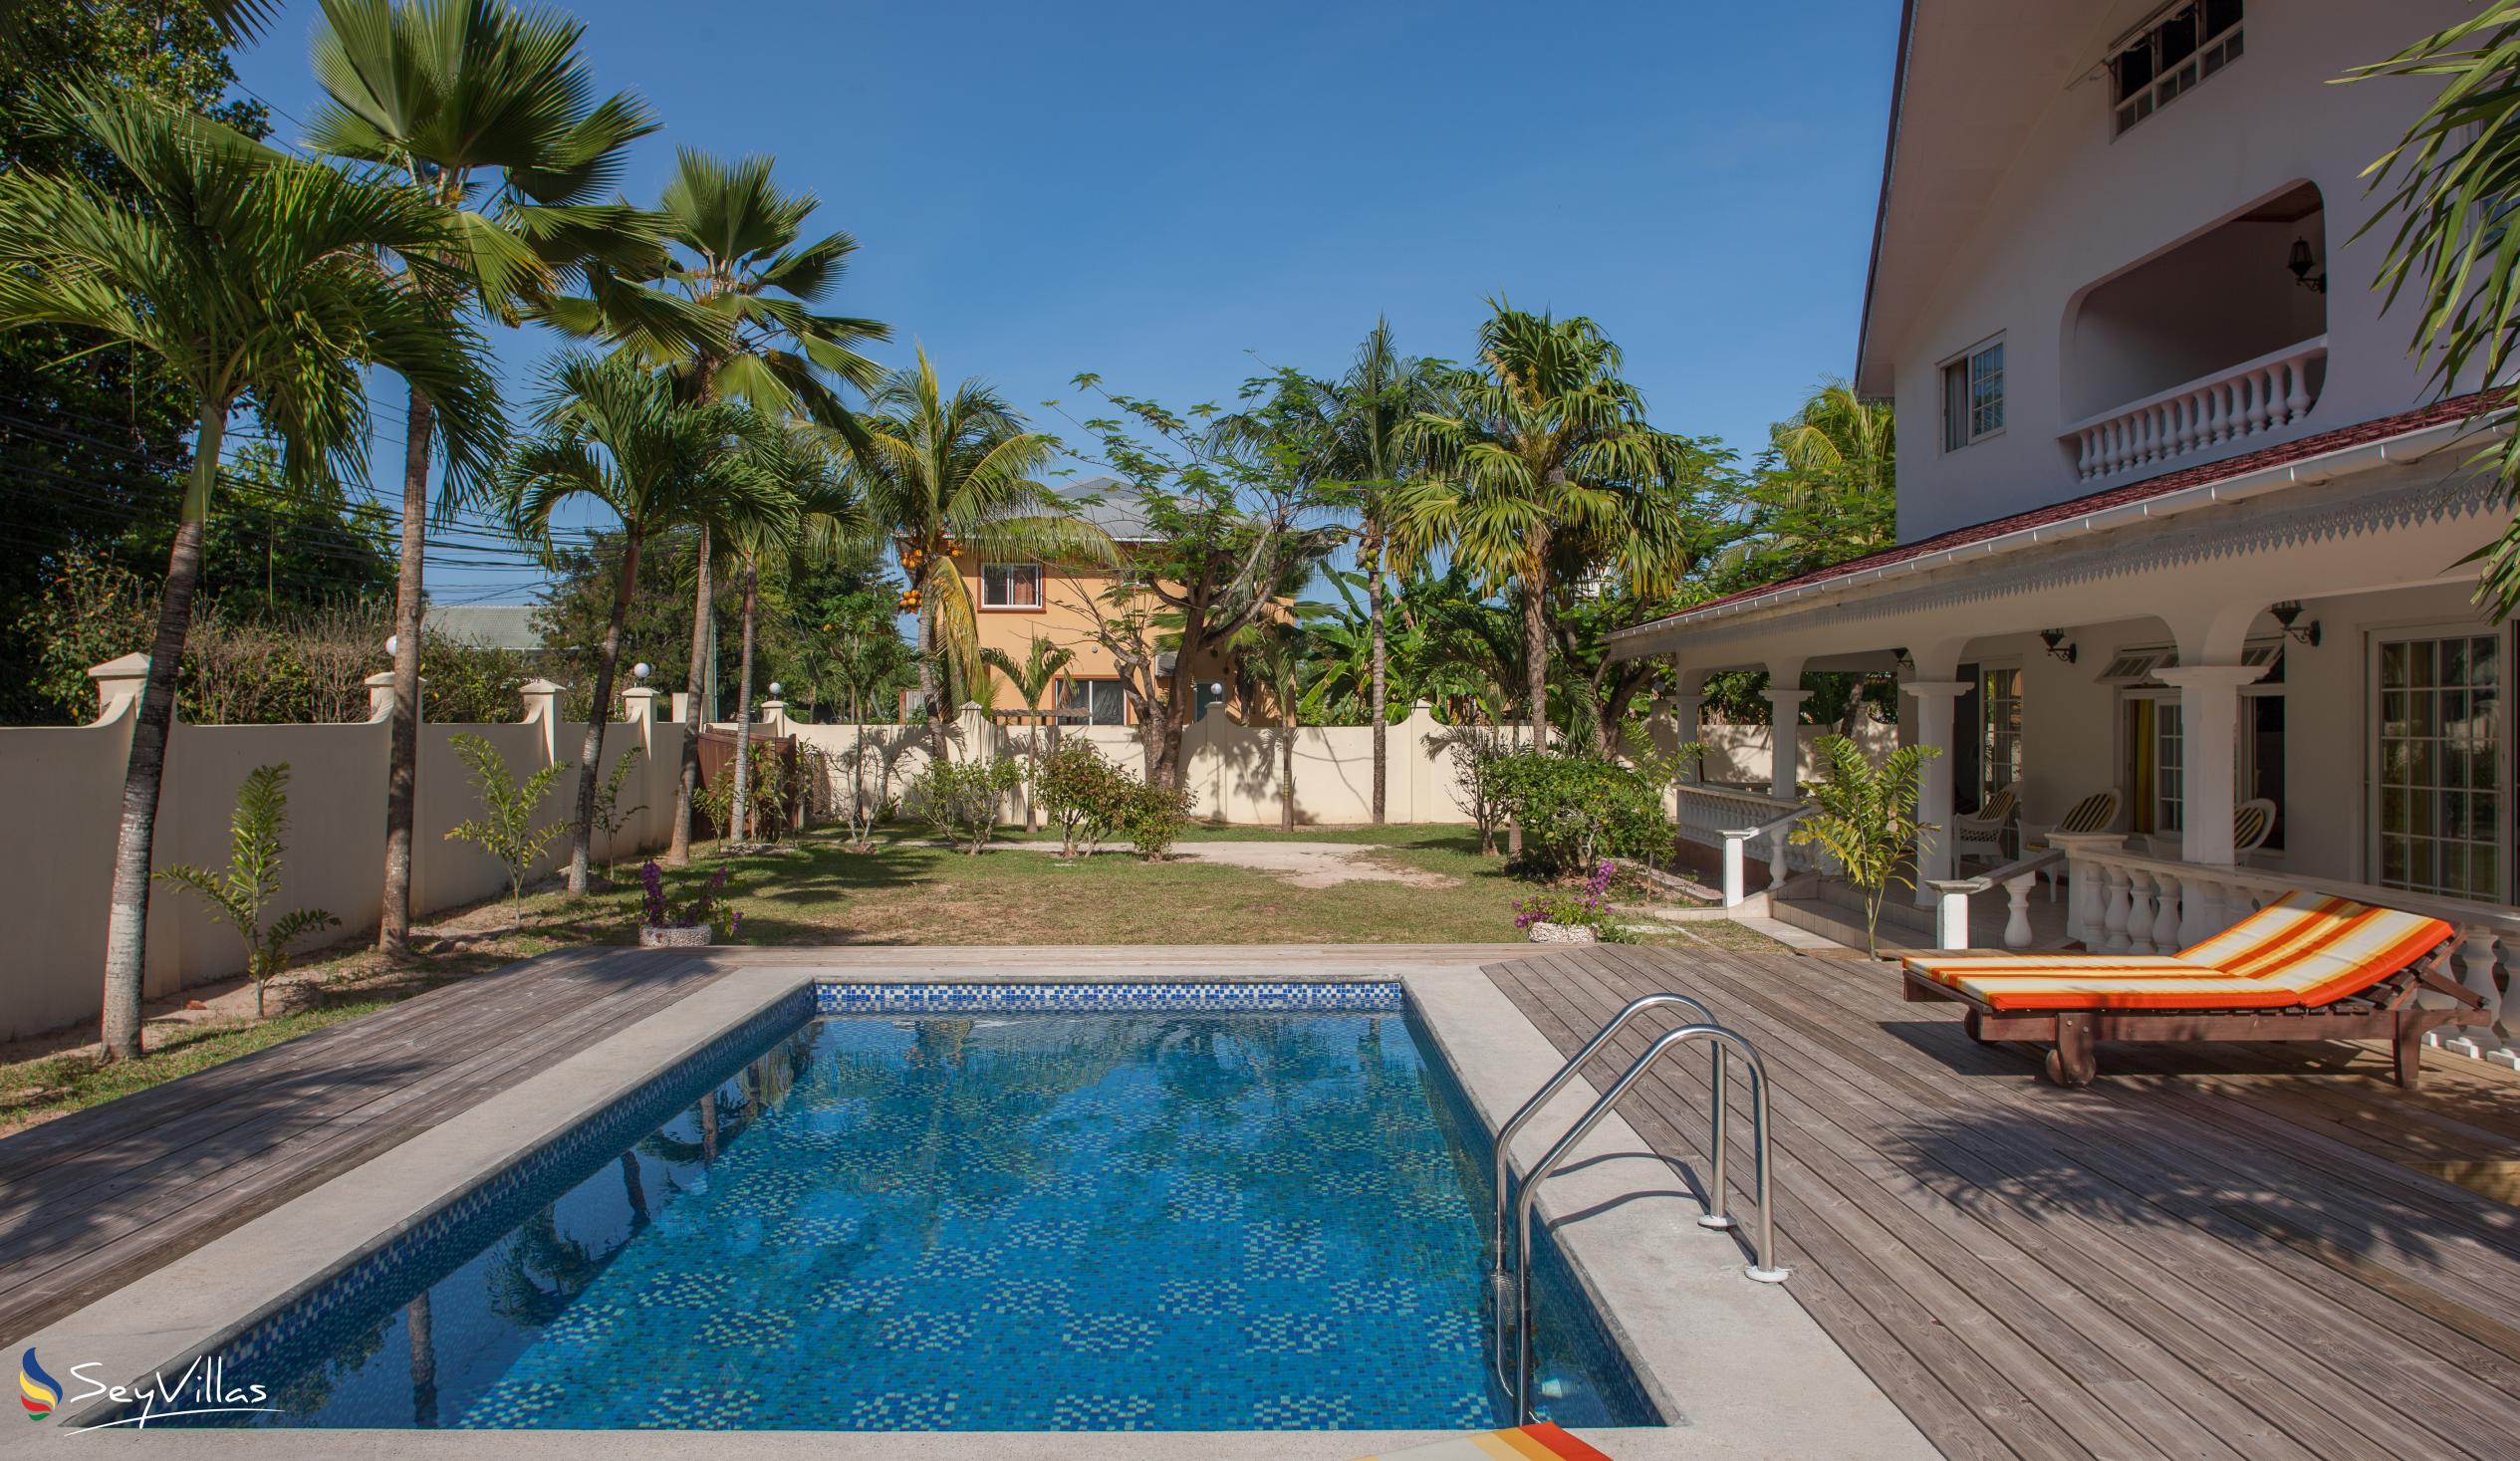 Foto 7: Villa Confort - Extérieur - Praslin (Seychelles)